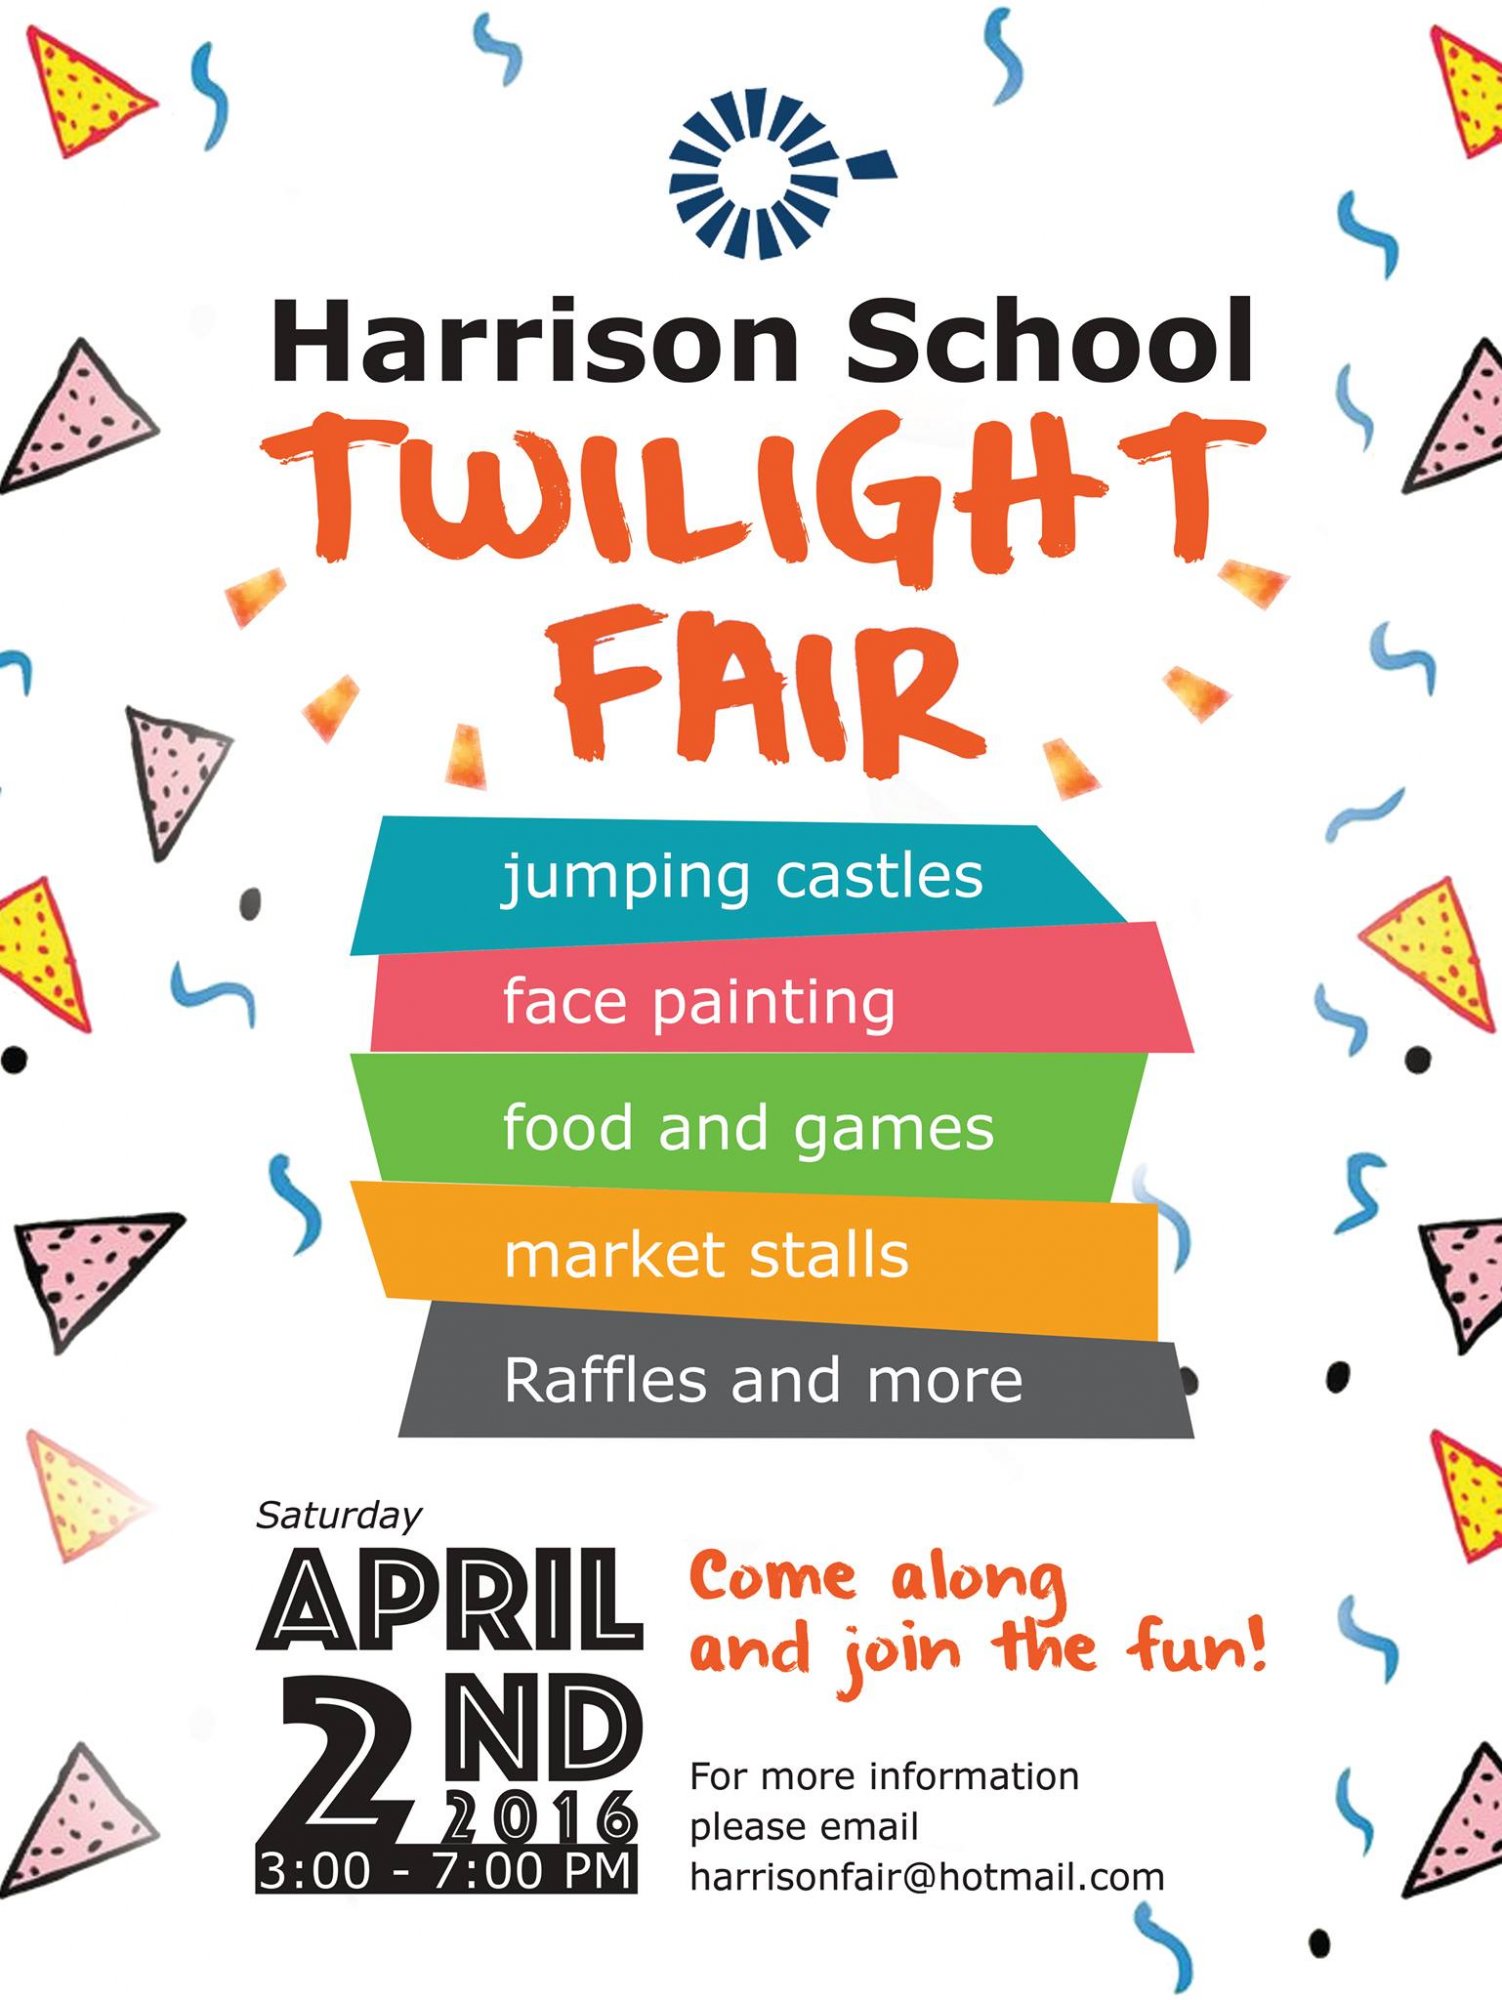 Harrison School Twilight Fair